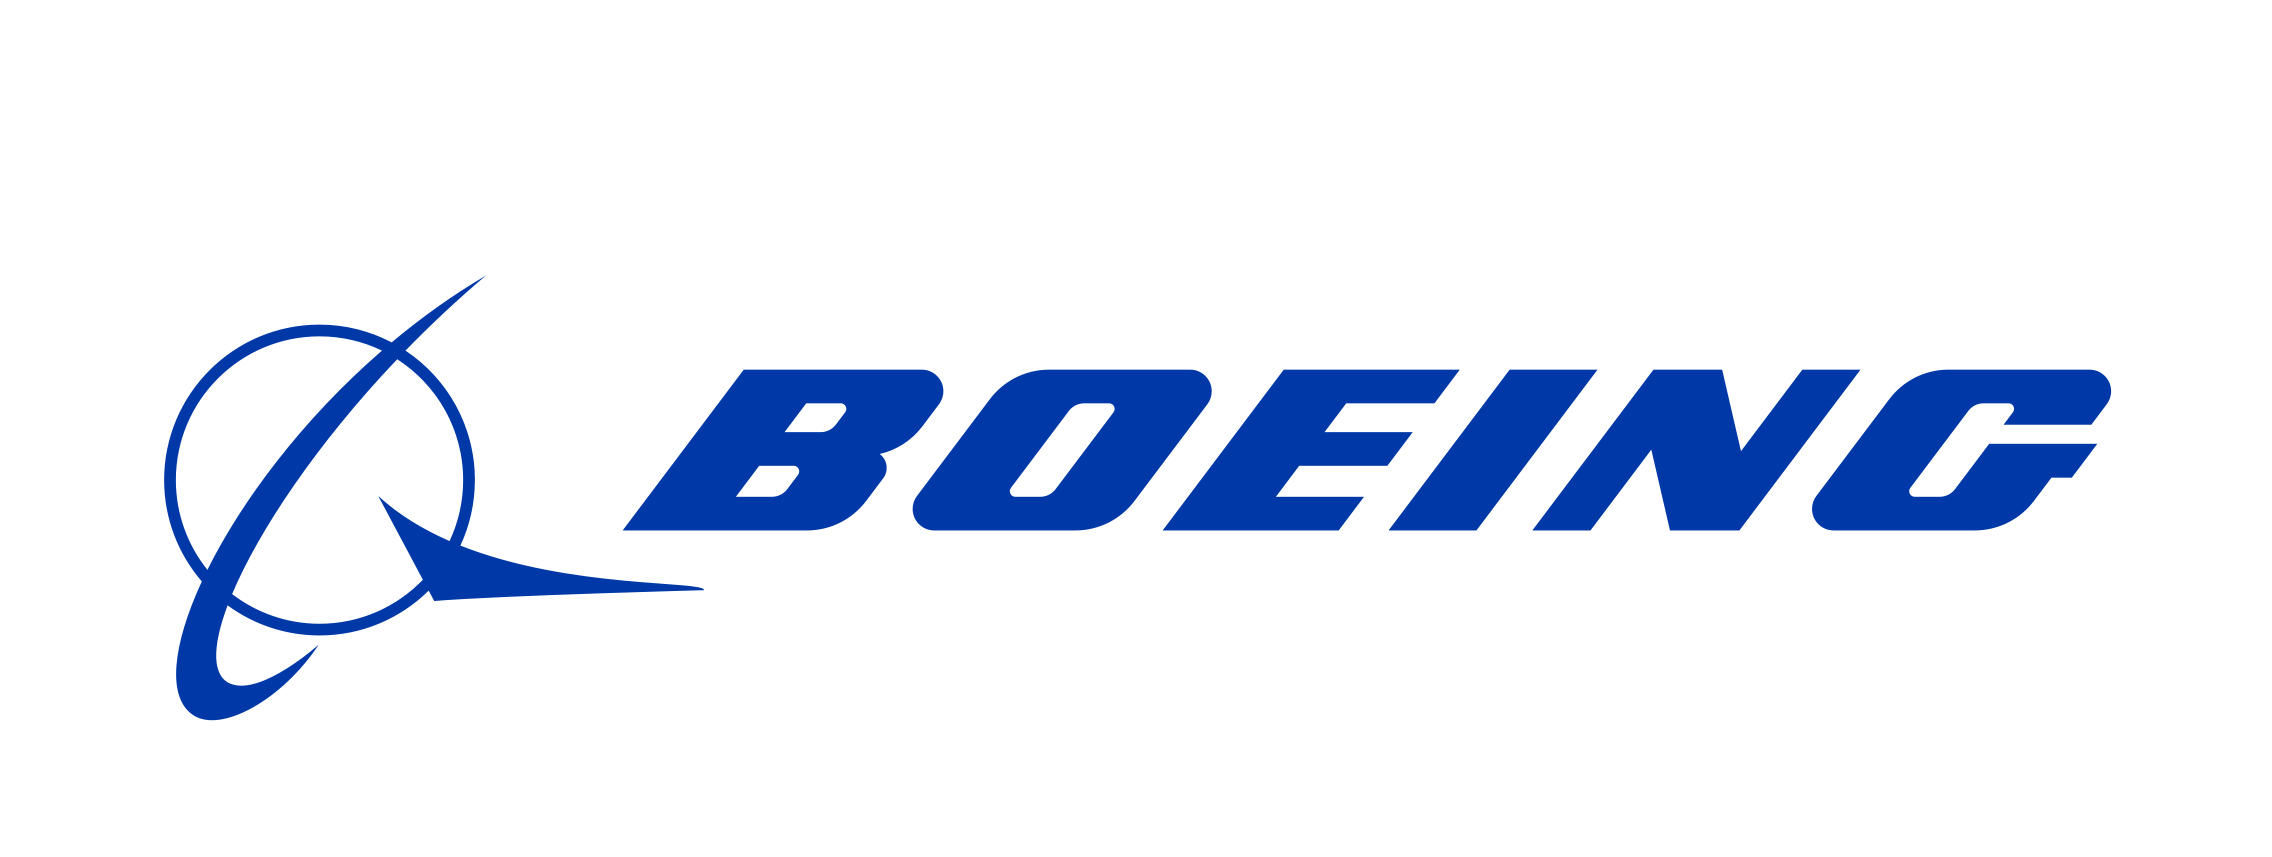 Boeing: Boeing France - Accueil